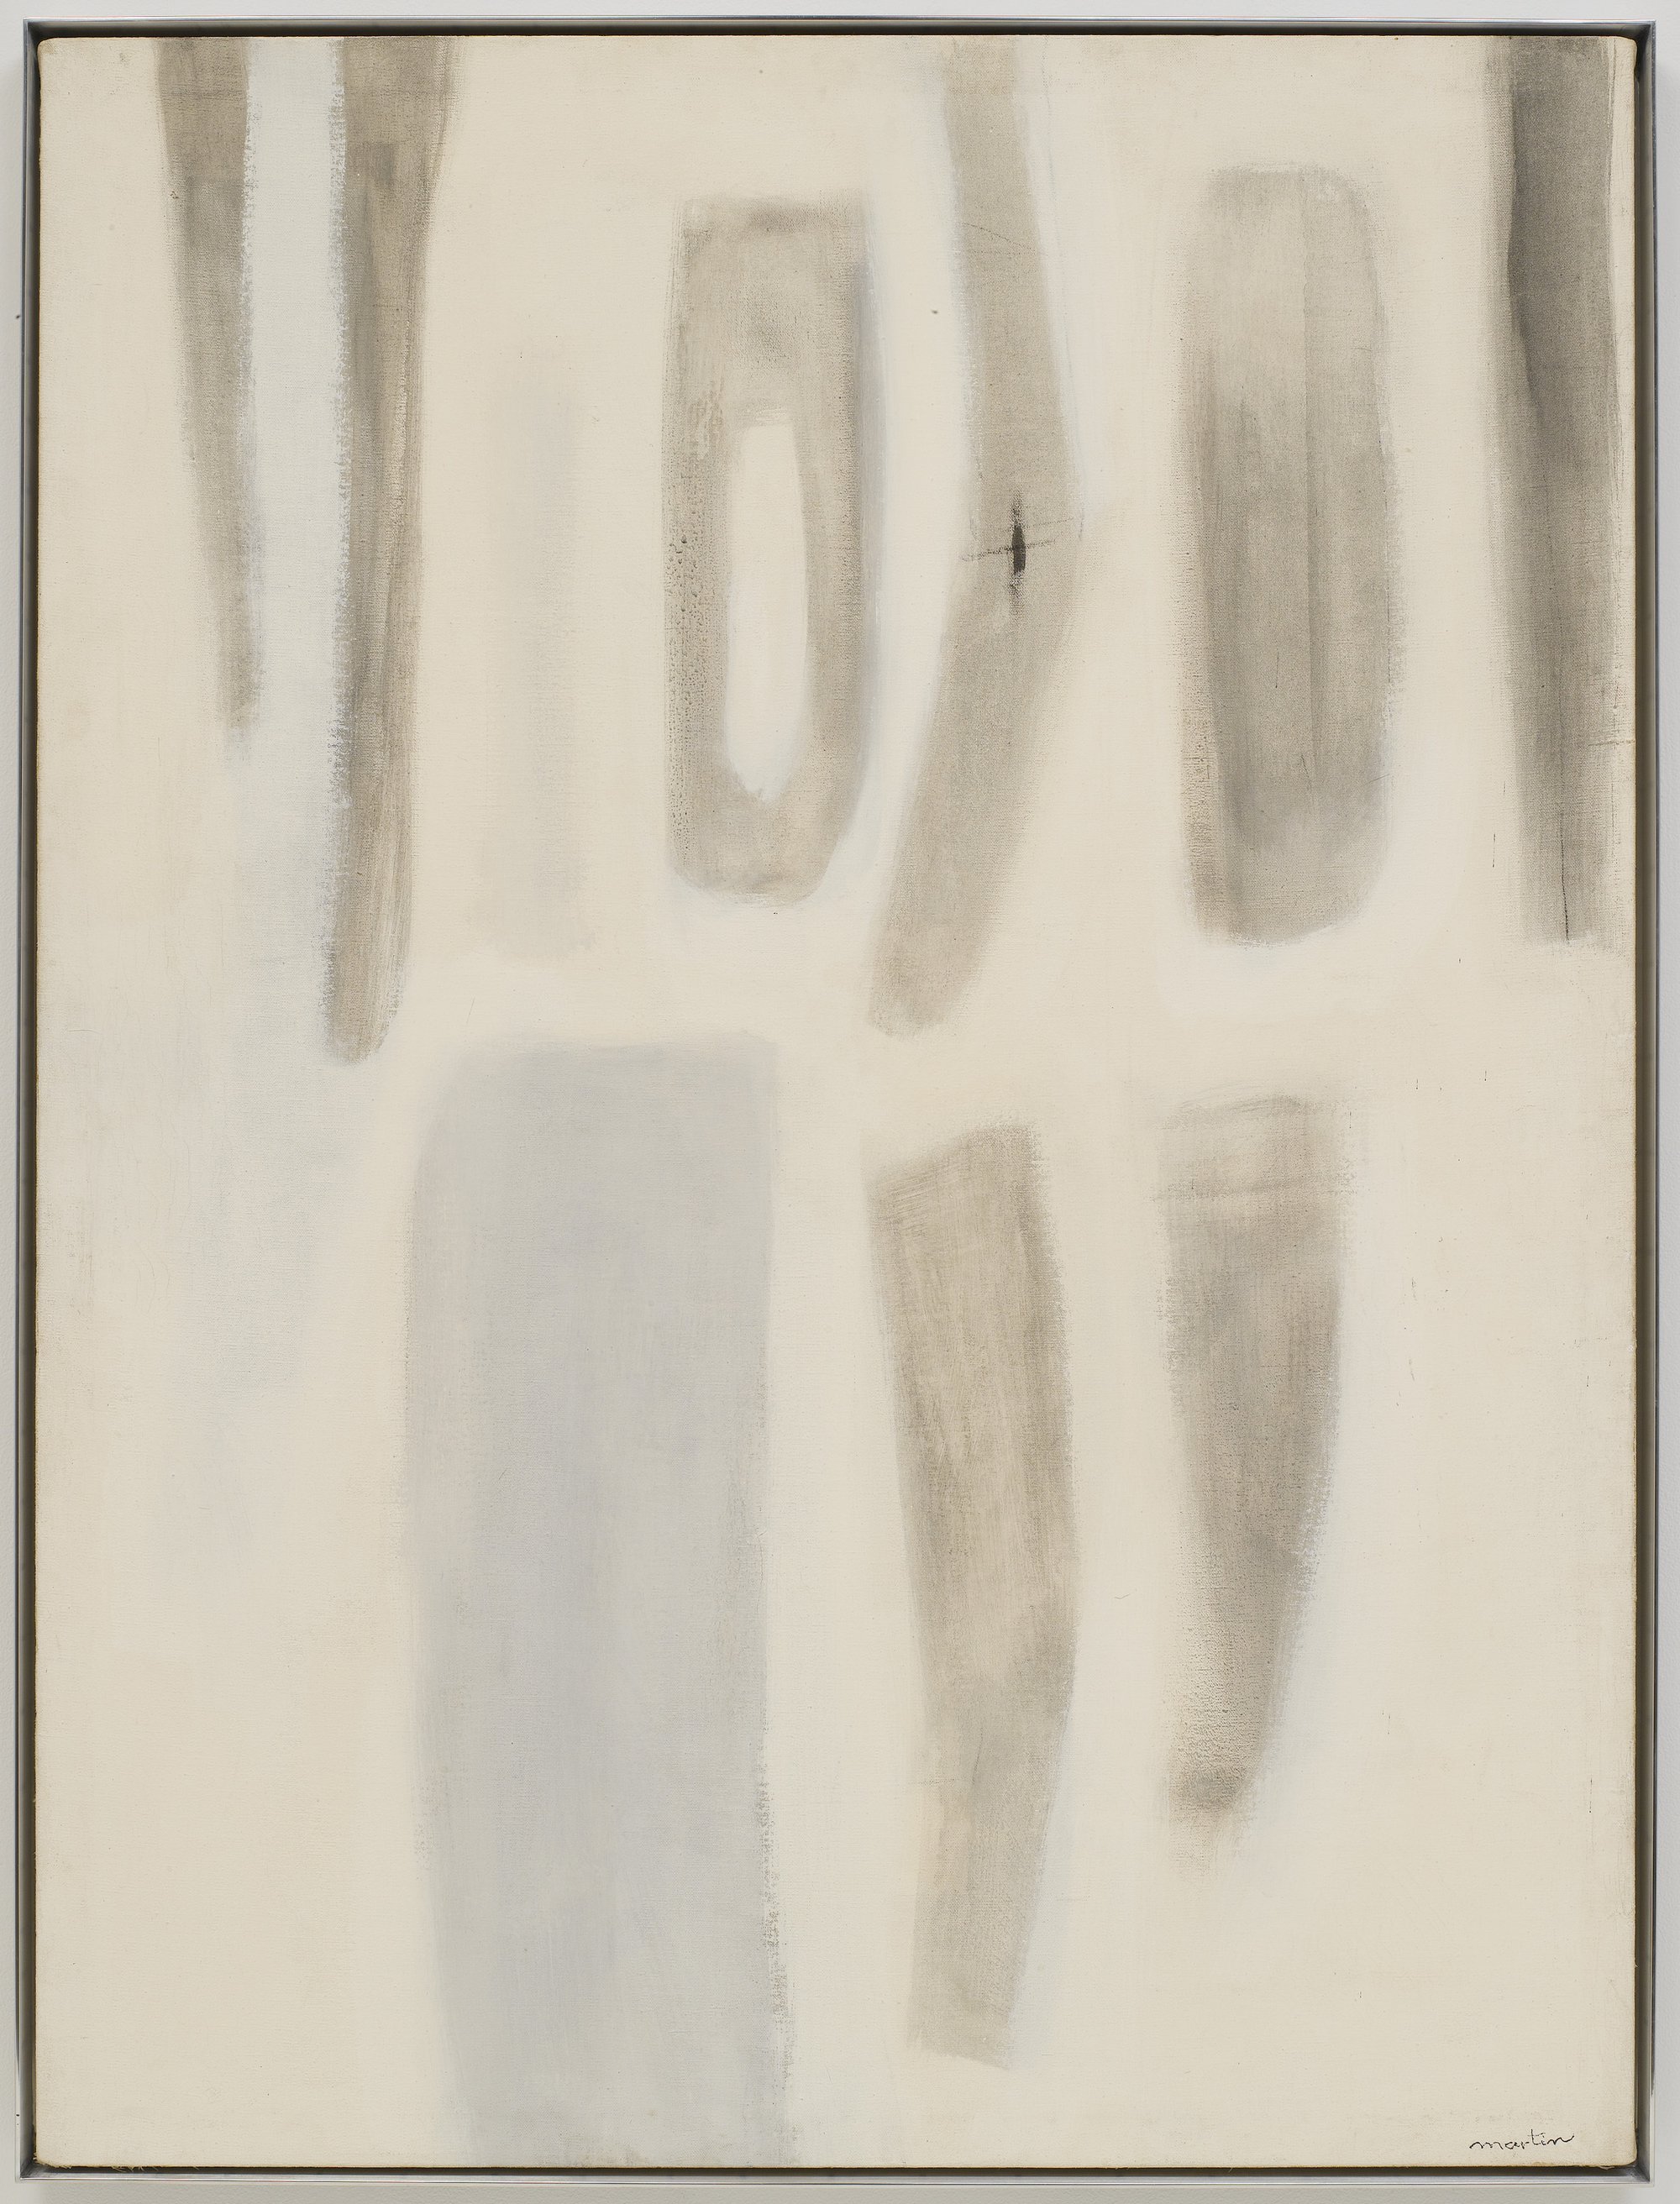 Richard  Diebenkorn "Untitled 1955" 35mm Art Slide Abstract Expressionism 